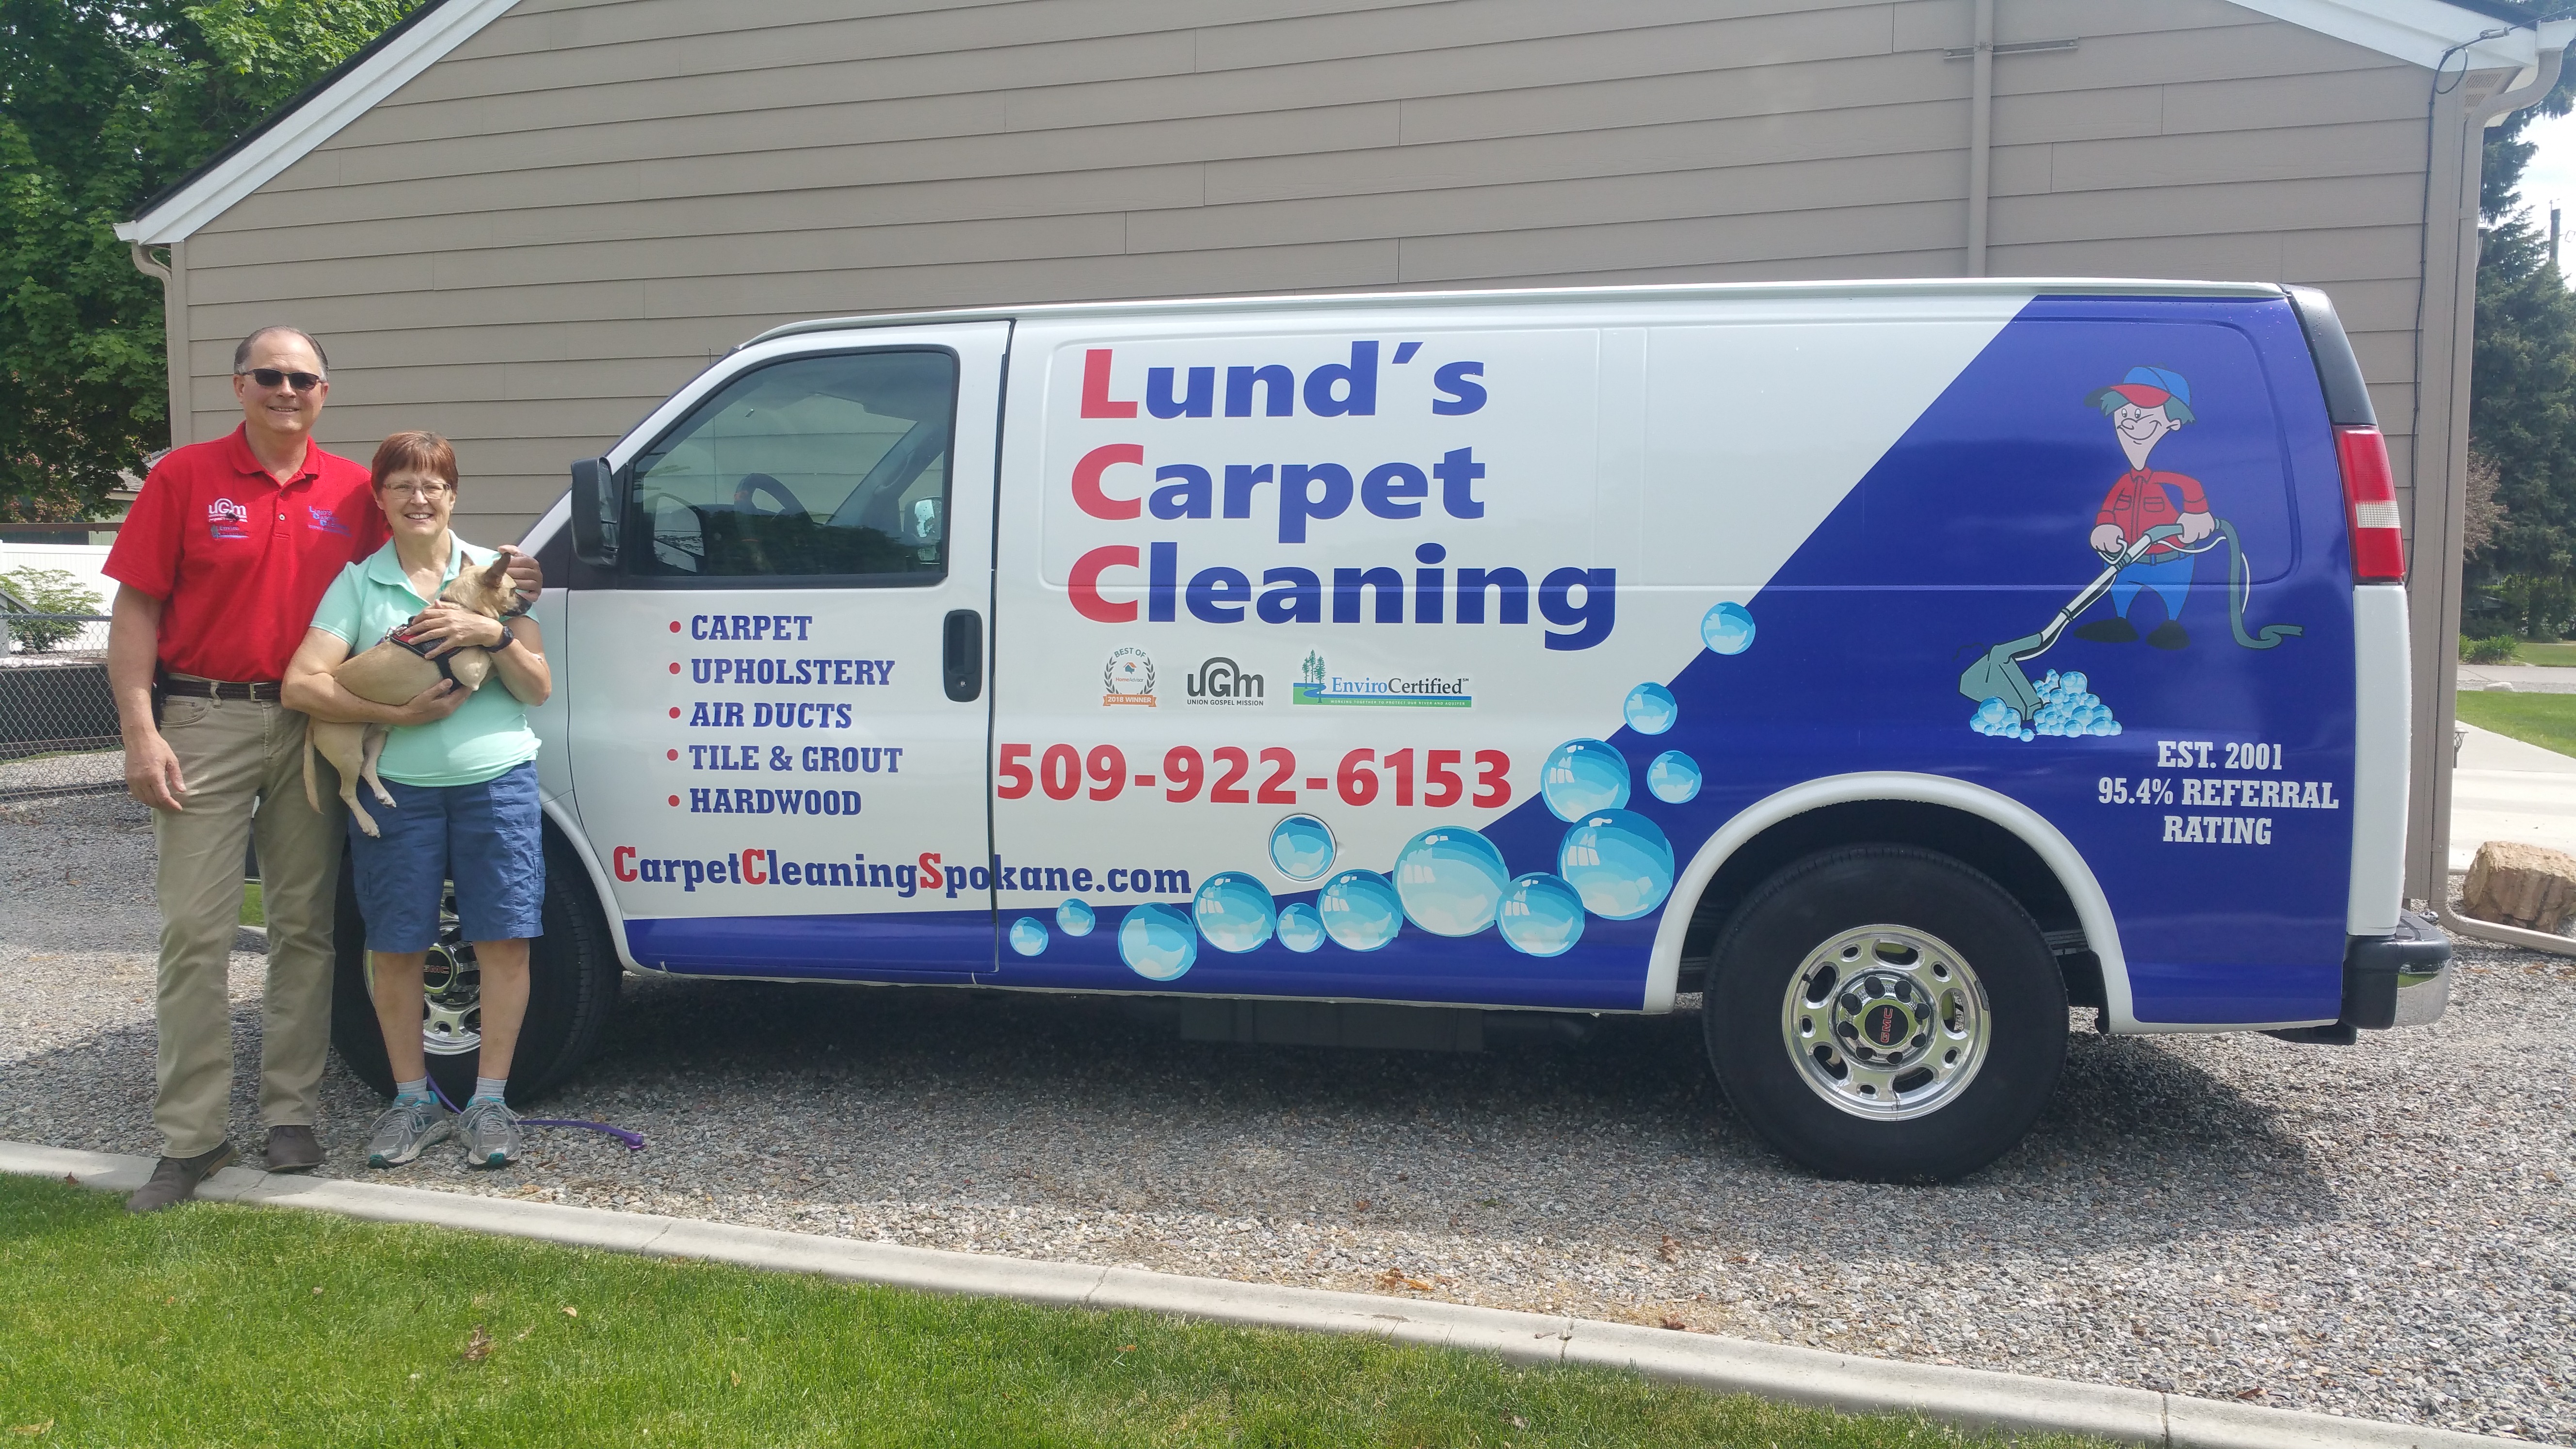 Lund’s | Carpet Cleaning Spokane ®